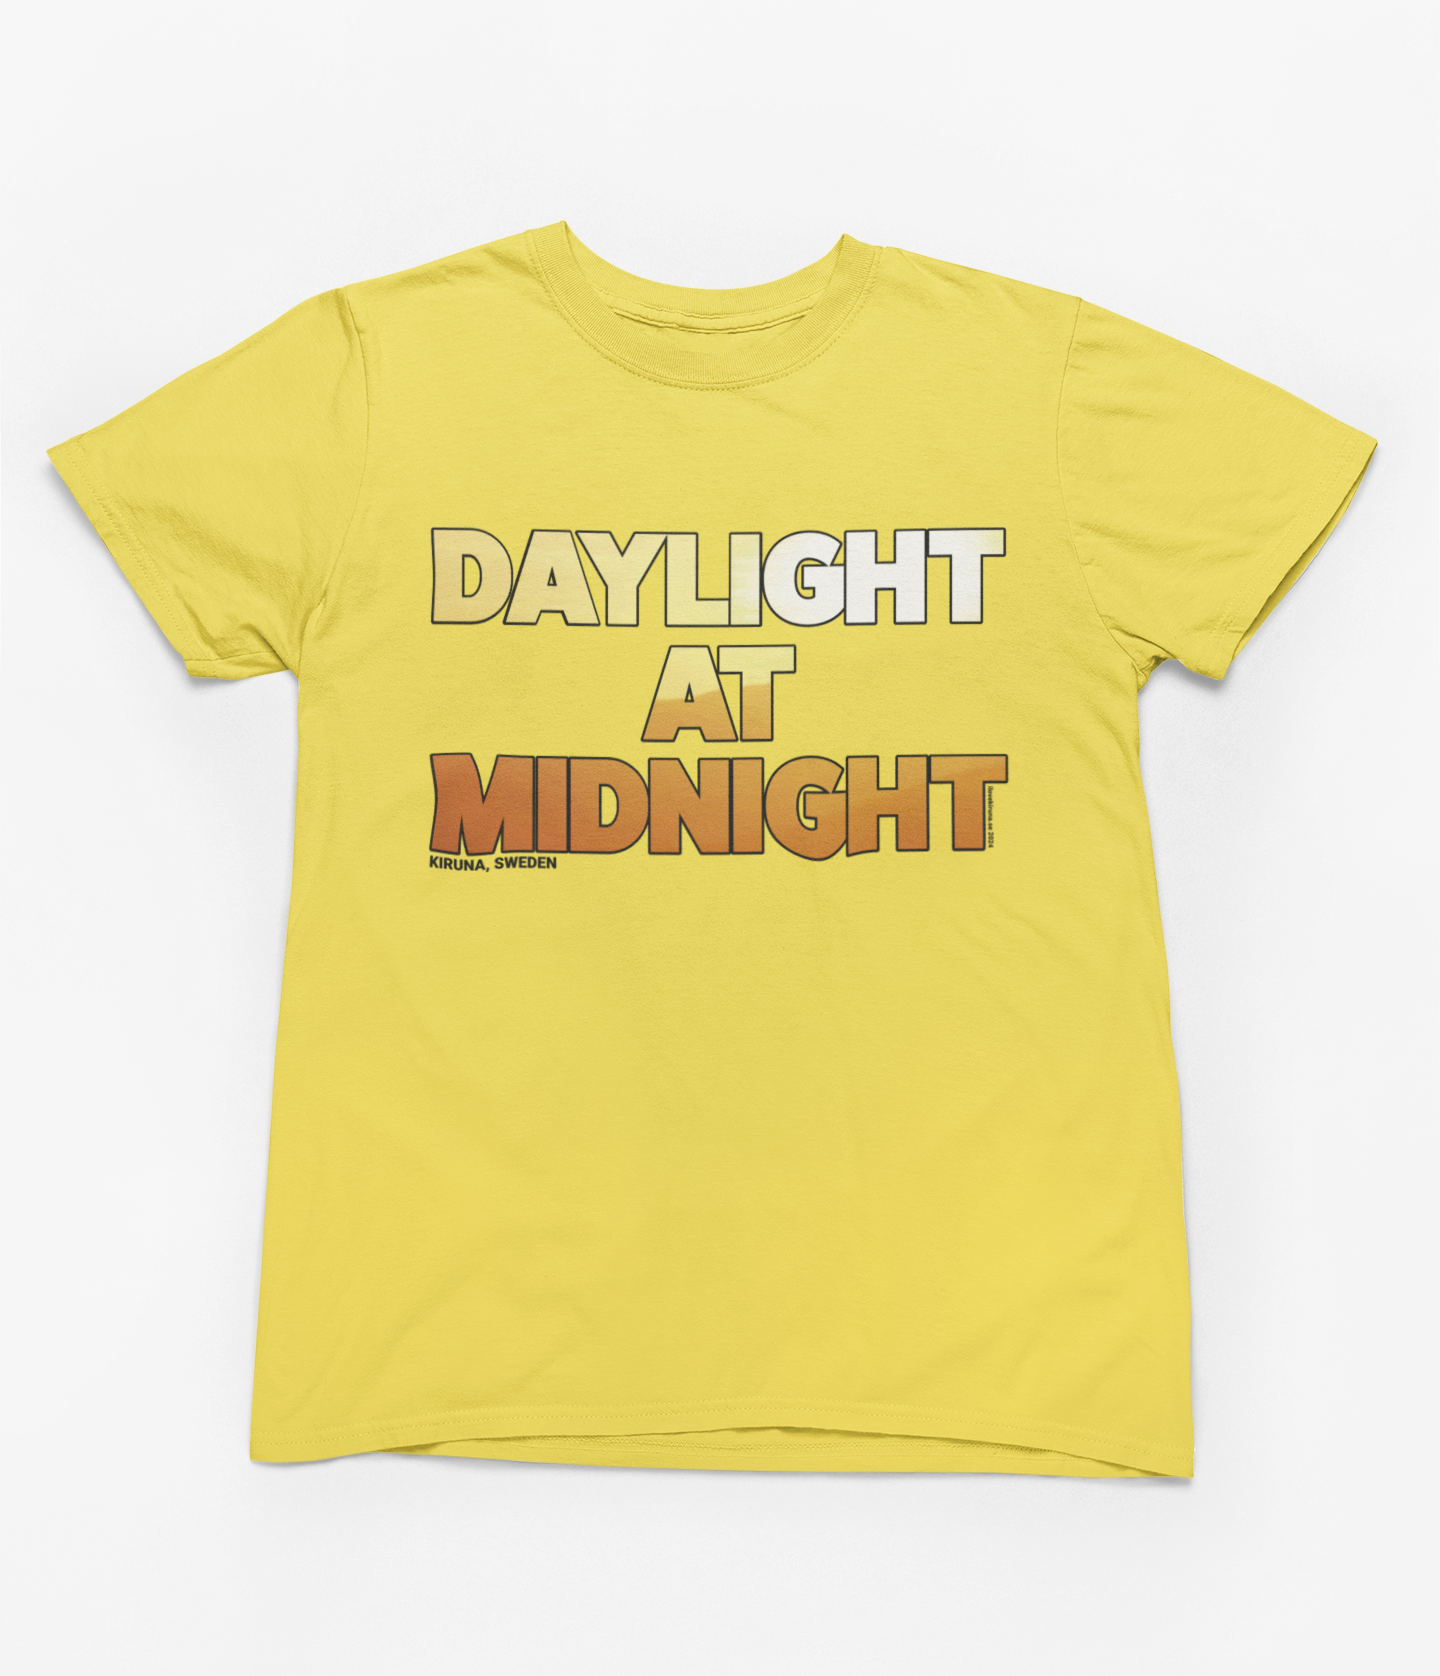 Daylight at midnight